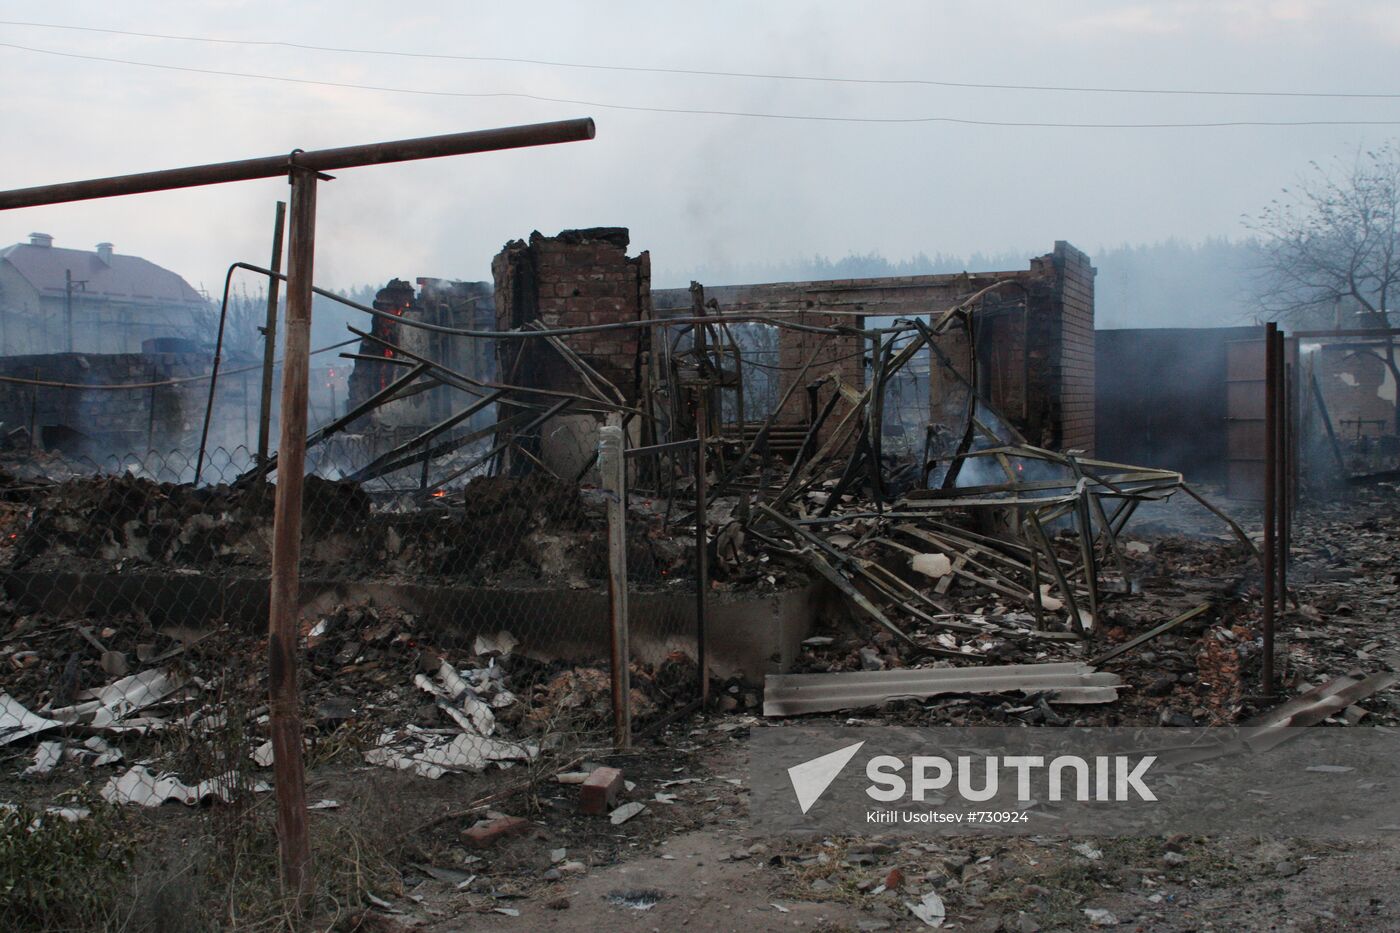 Maslovka village fire aftermath